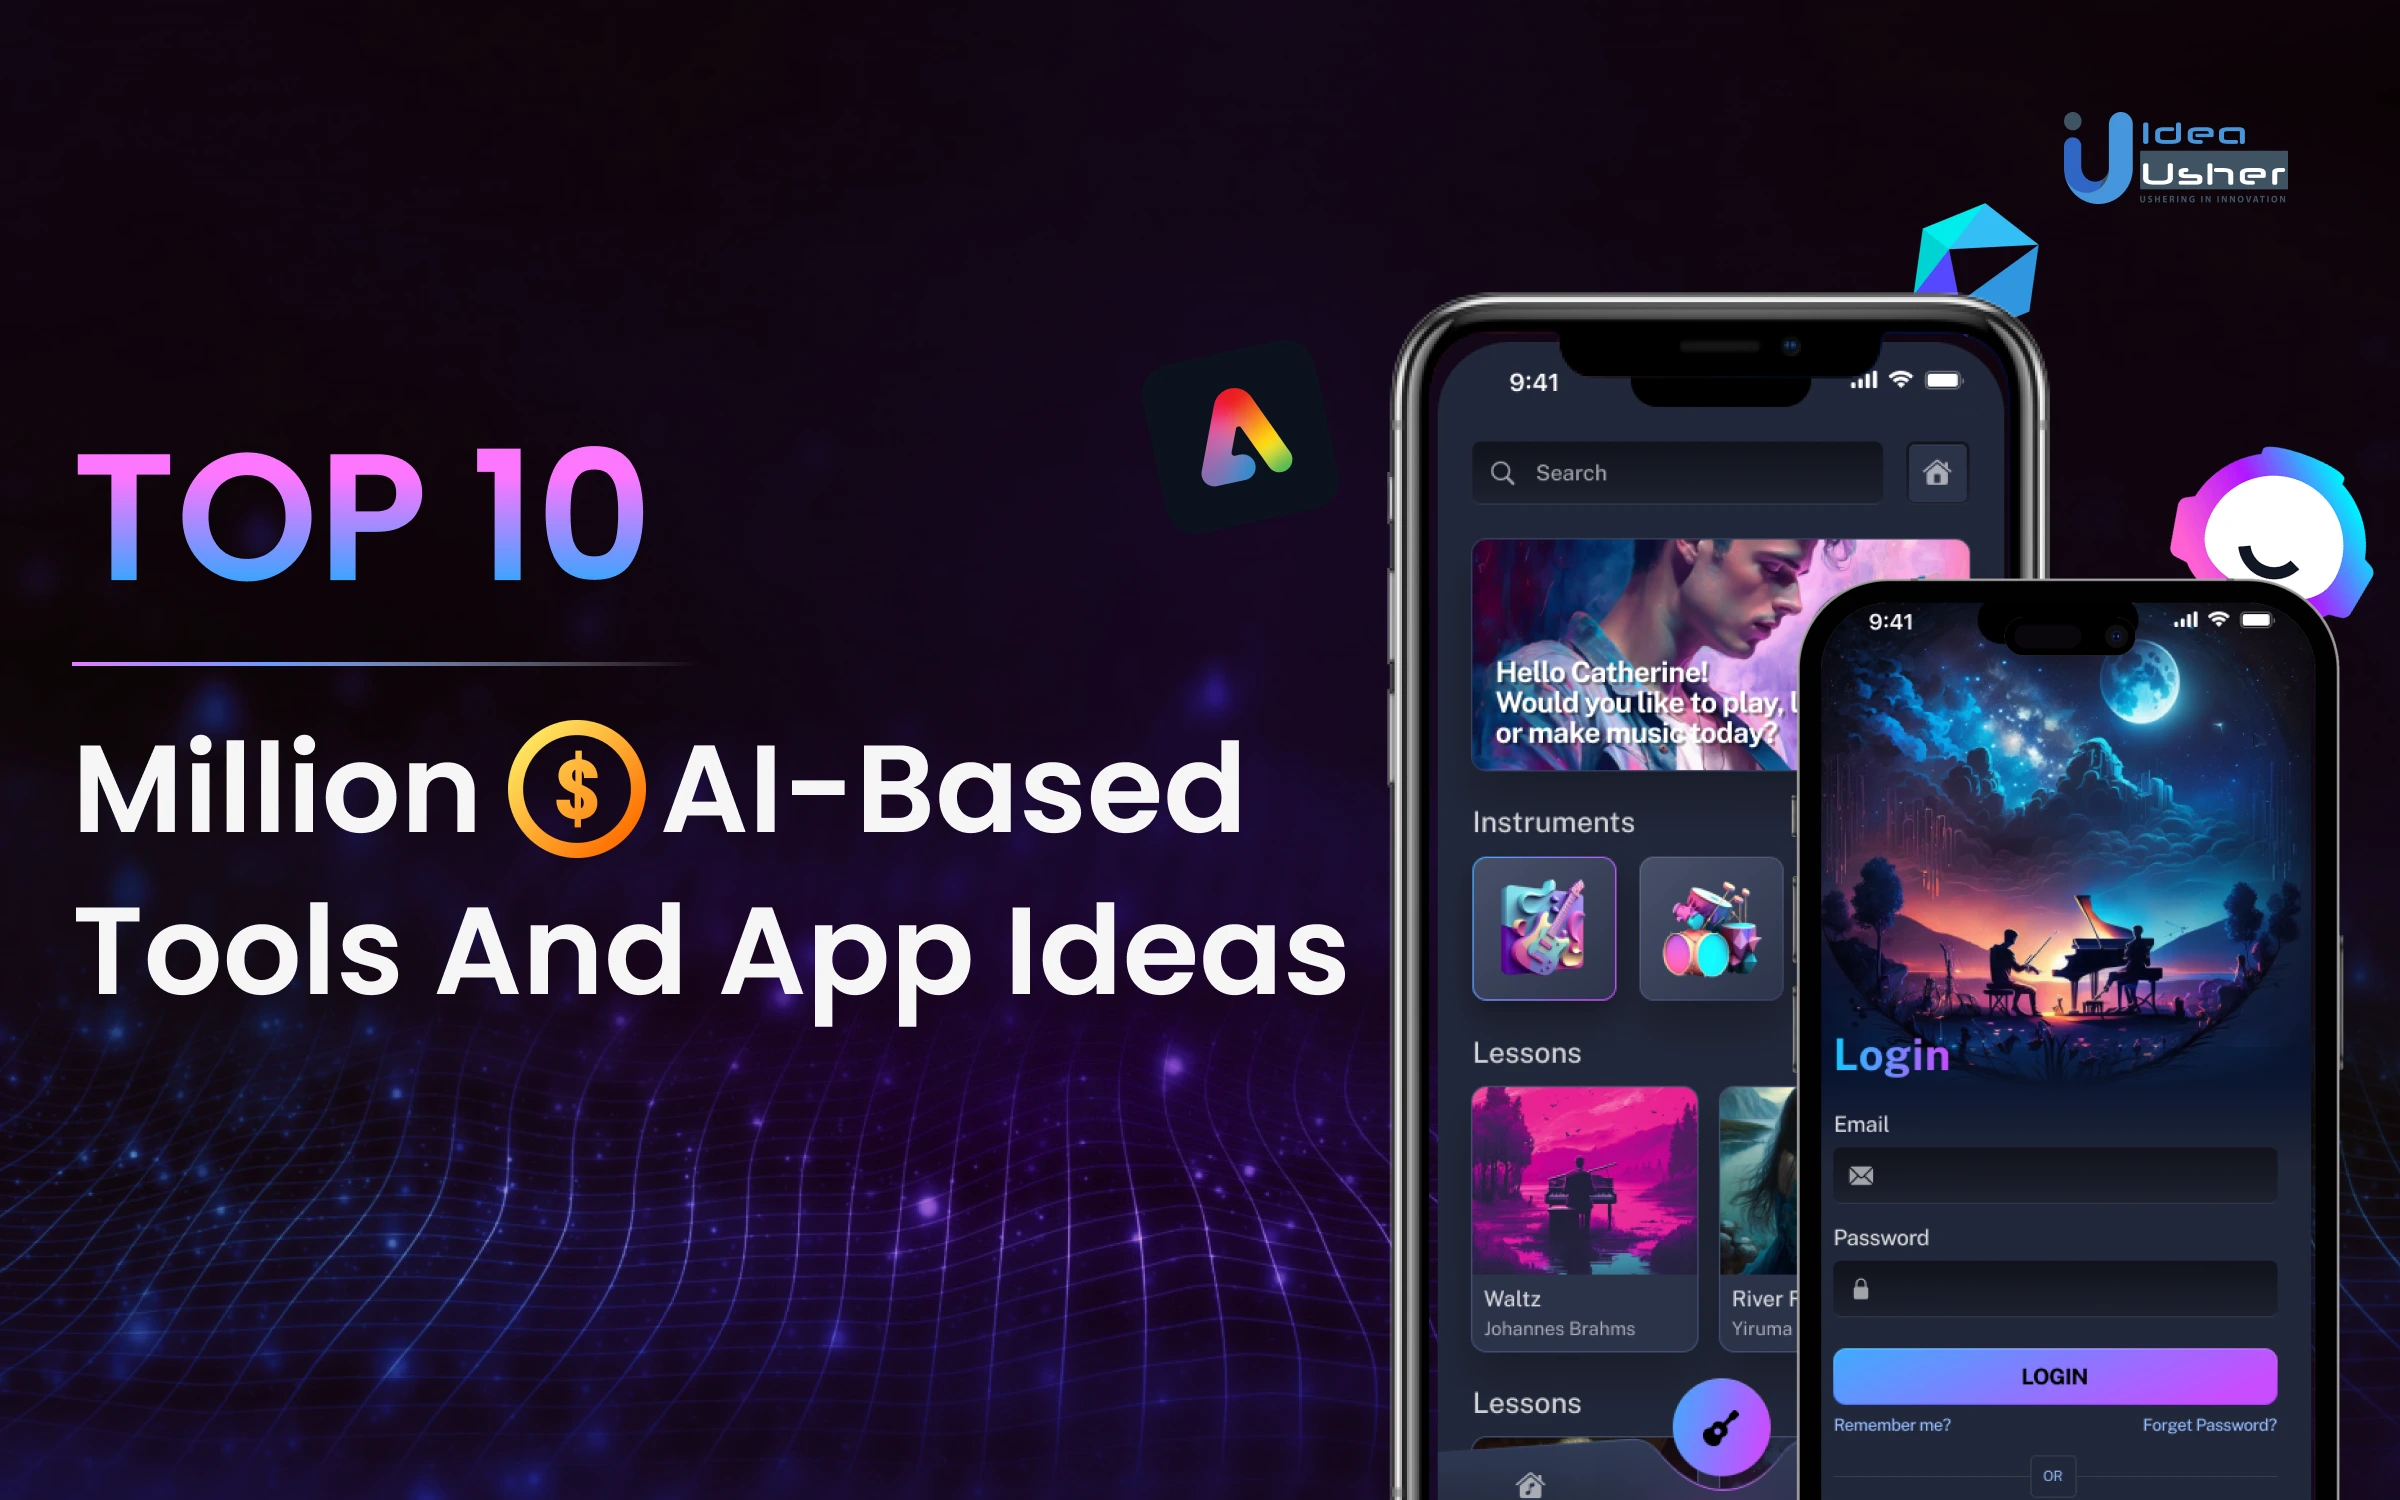 Top 10 Million Dollar AI-Based Tools and App Ideas